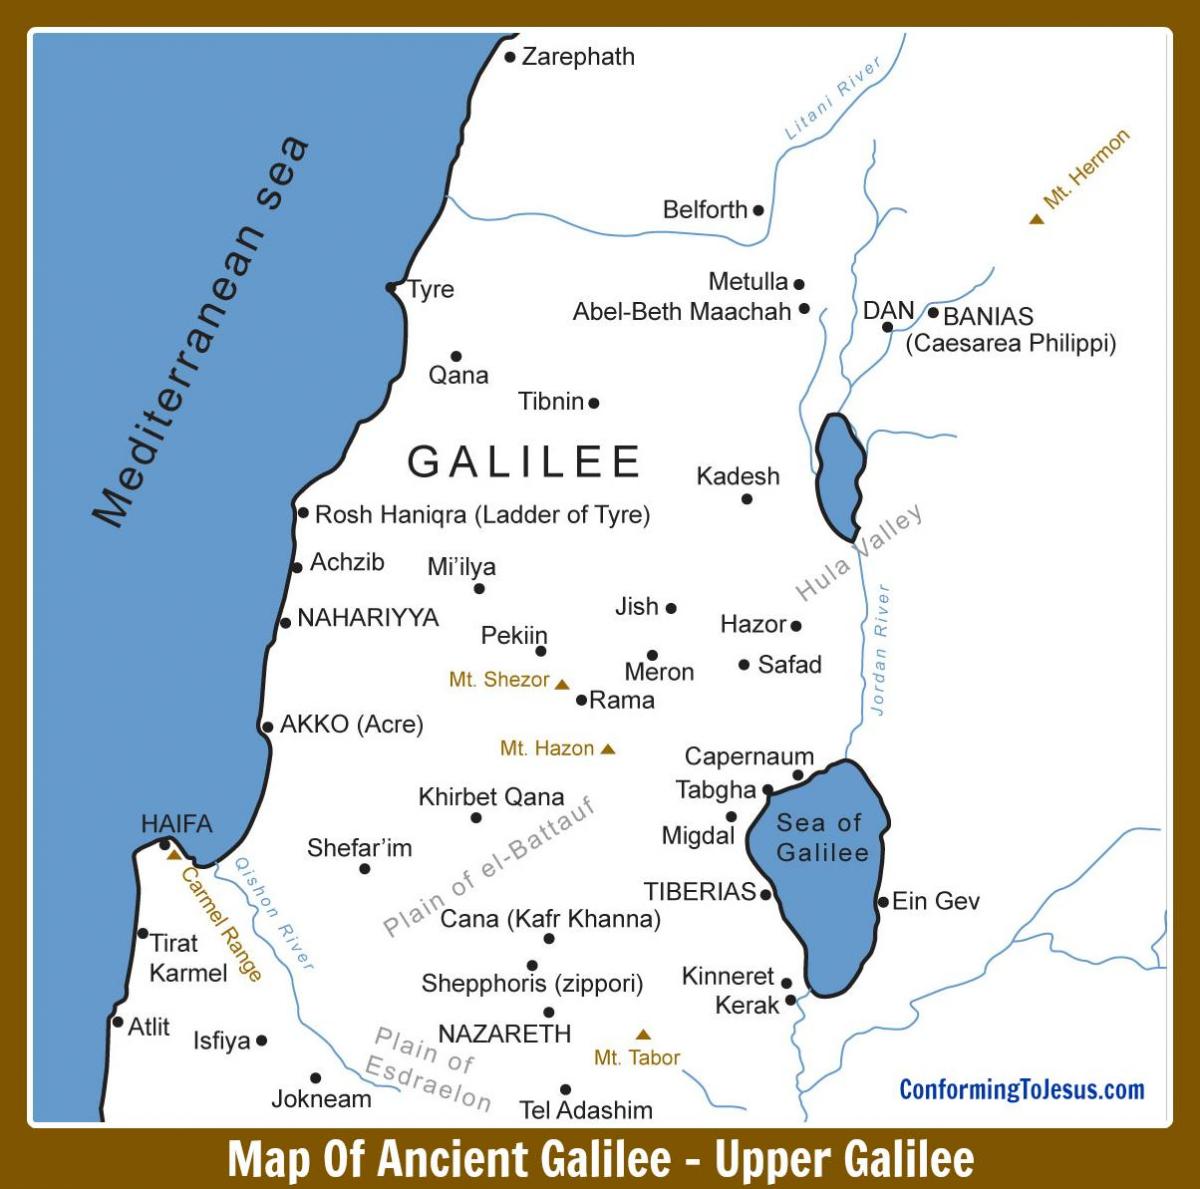 Jezus in Galilea